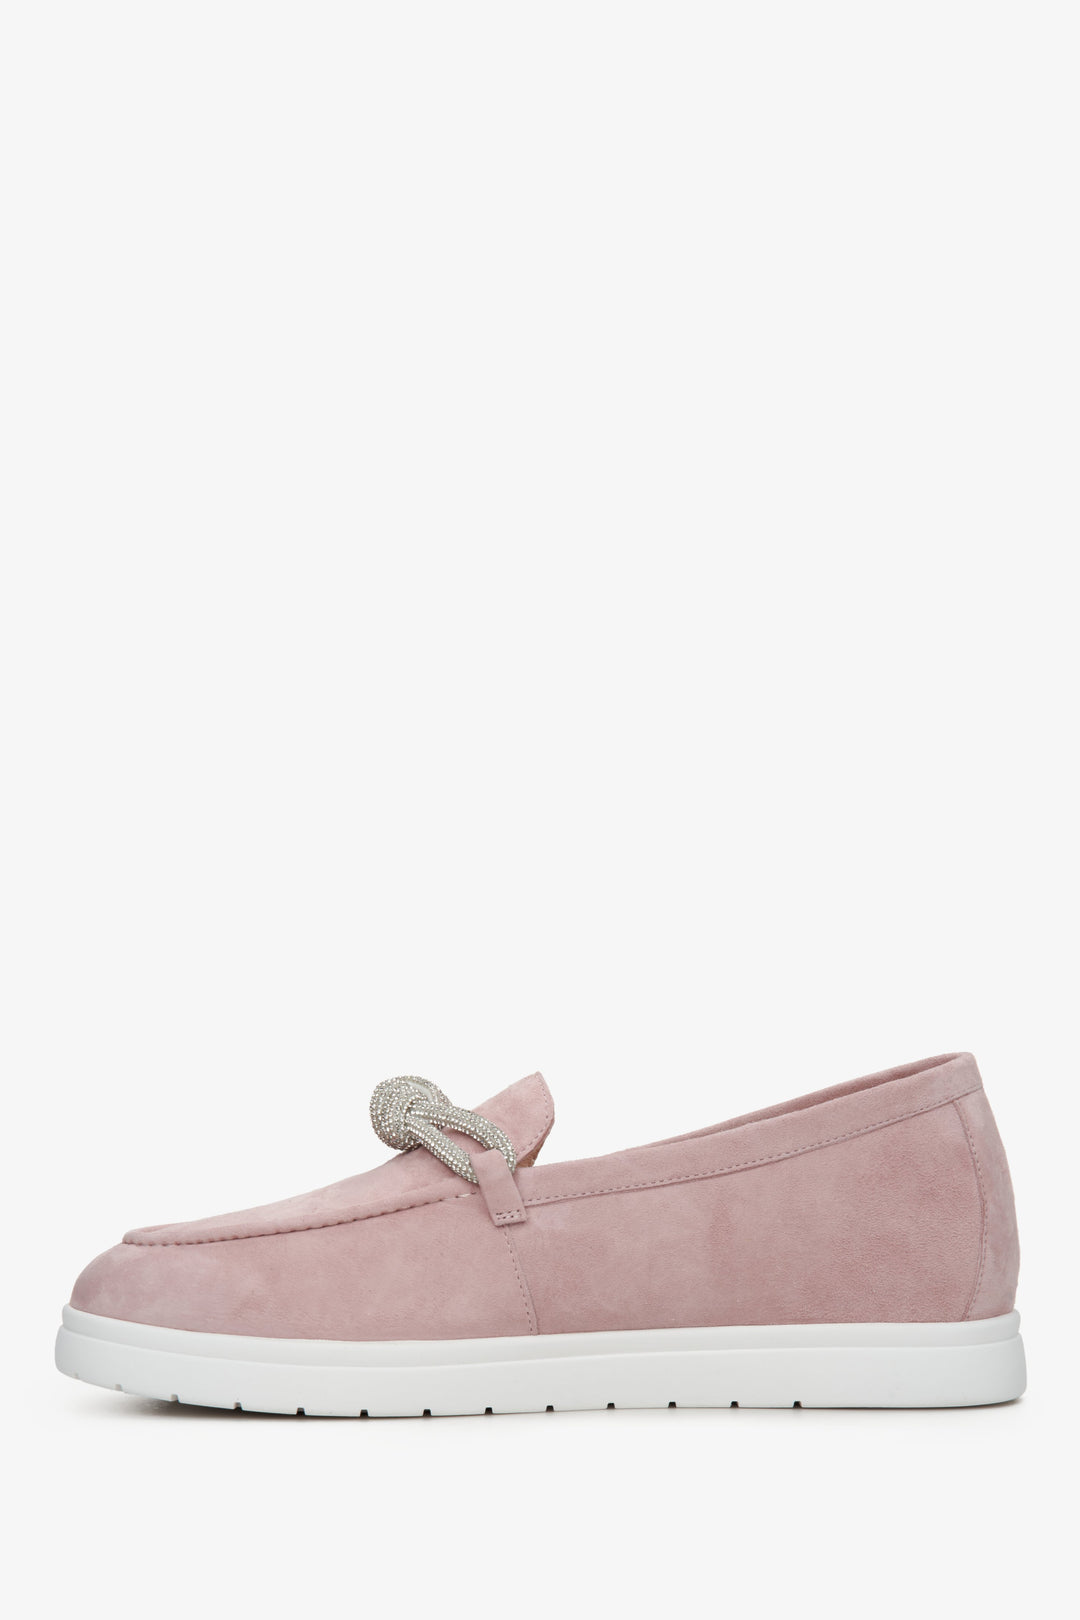 Estro women's velour moccasins in pink - shoe profile.